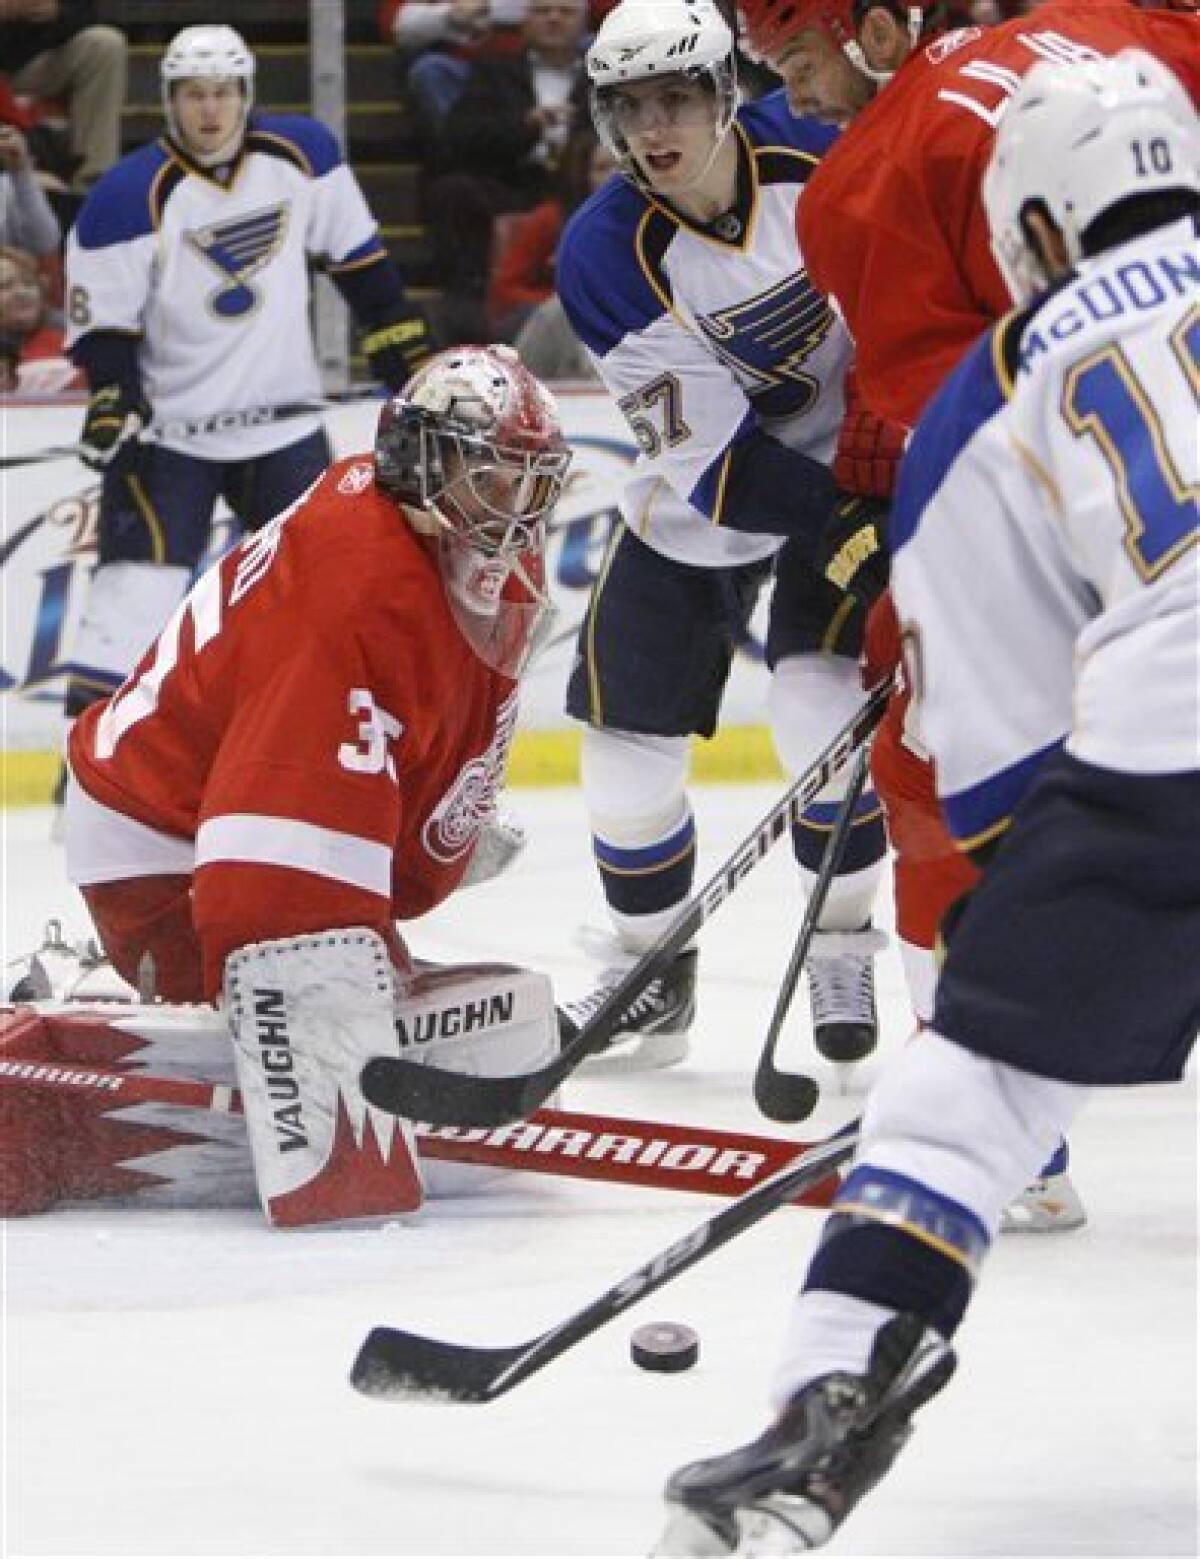 Detroit Red Wings goalie Chris Osgood skates during warm ups at